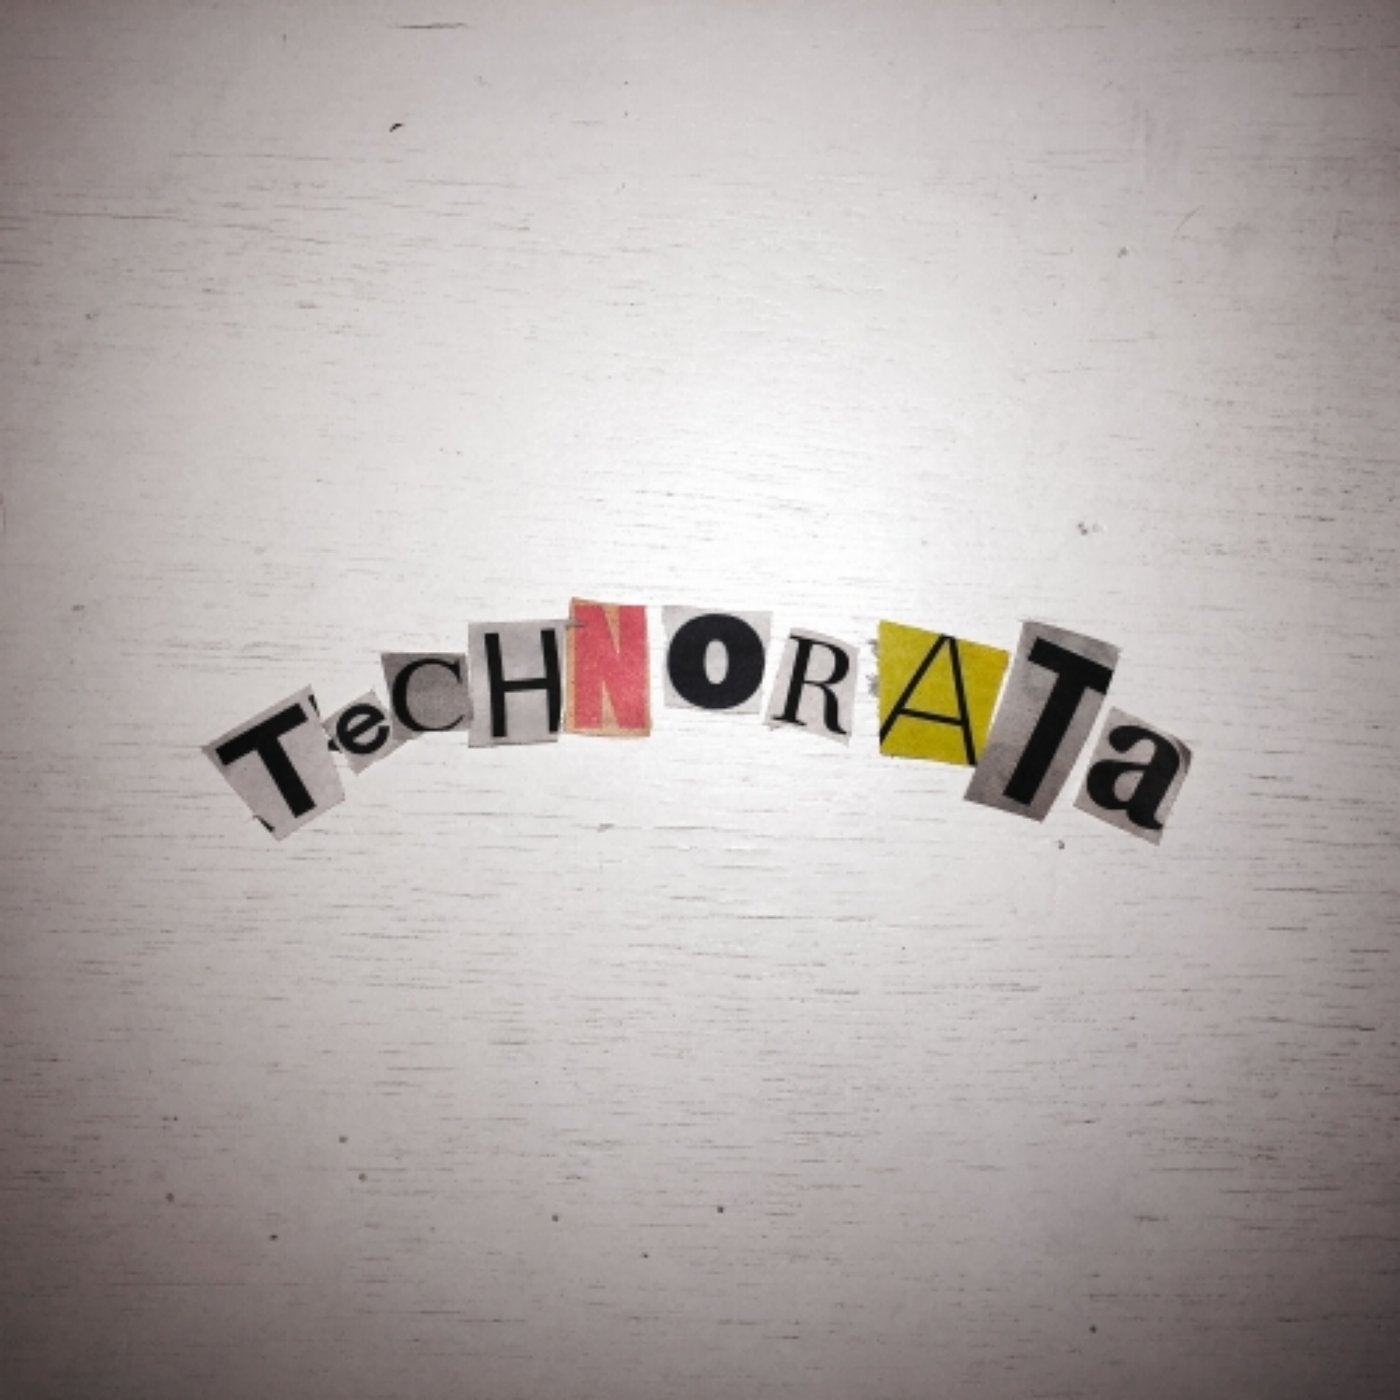 Technorata